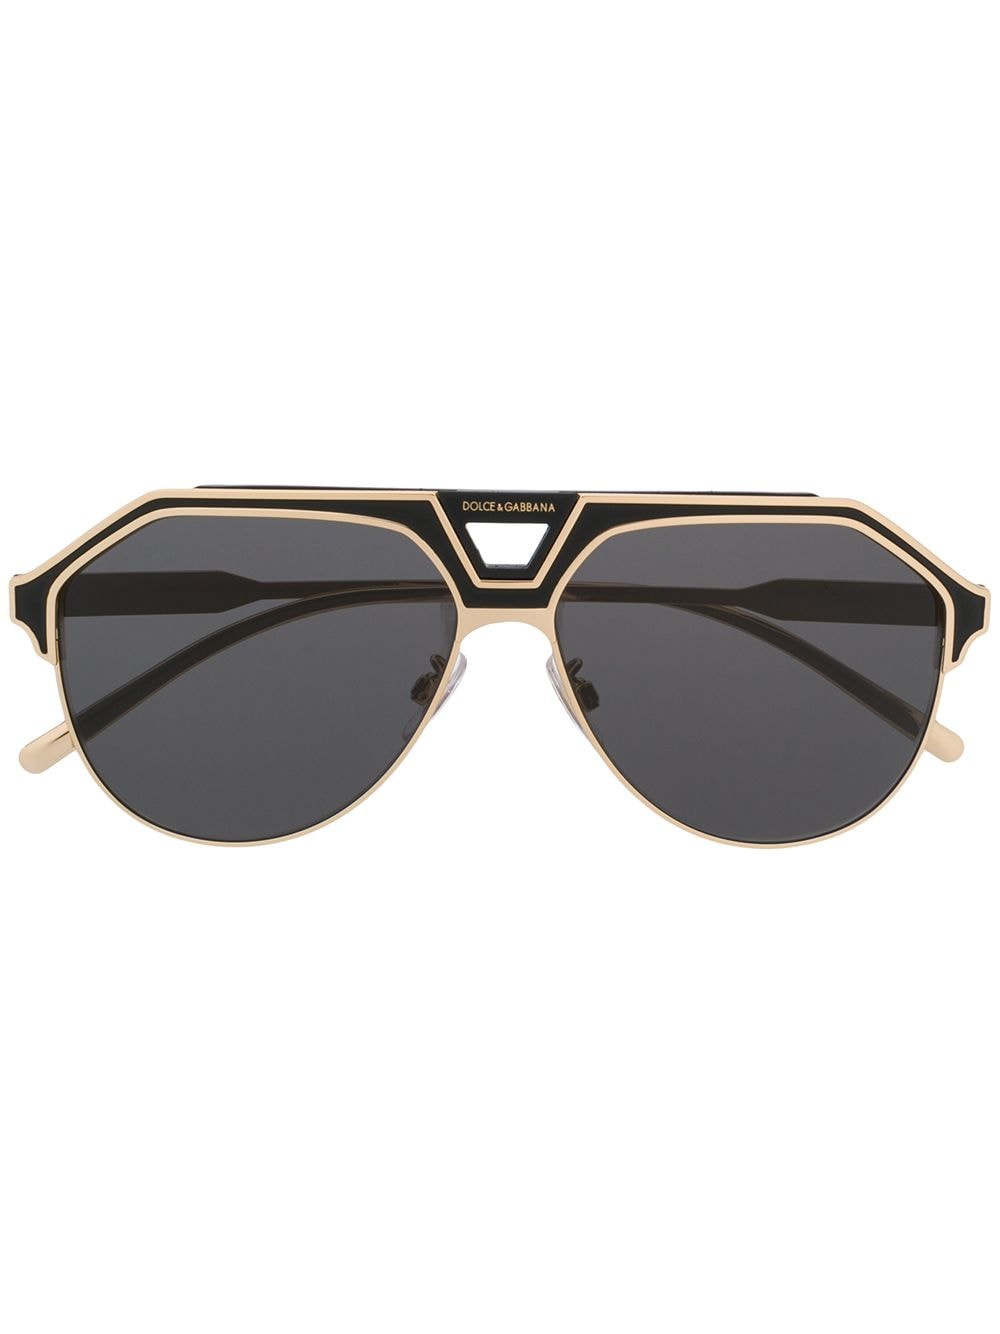 Dolce & Gabbana Eyewear pilot-style sunglasses - Black